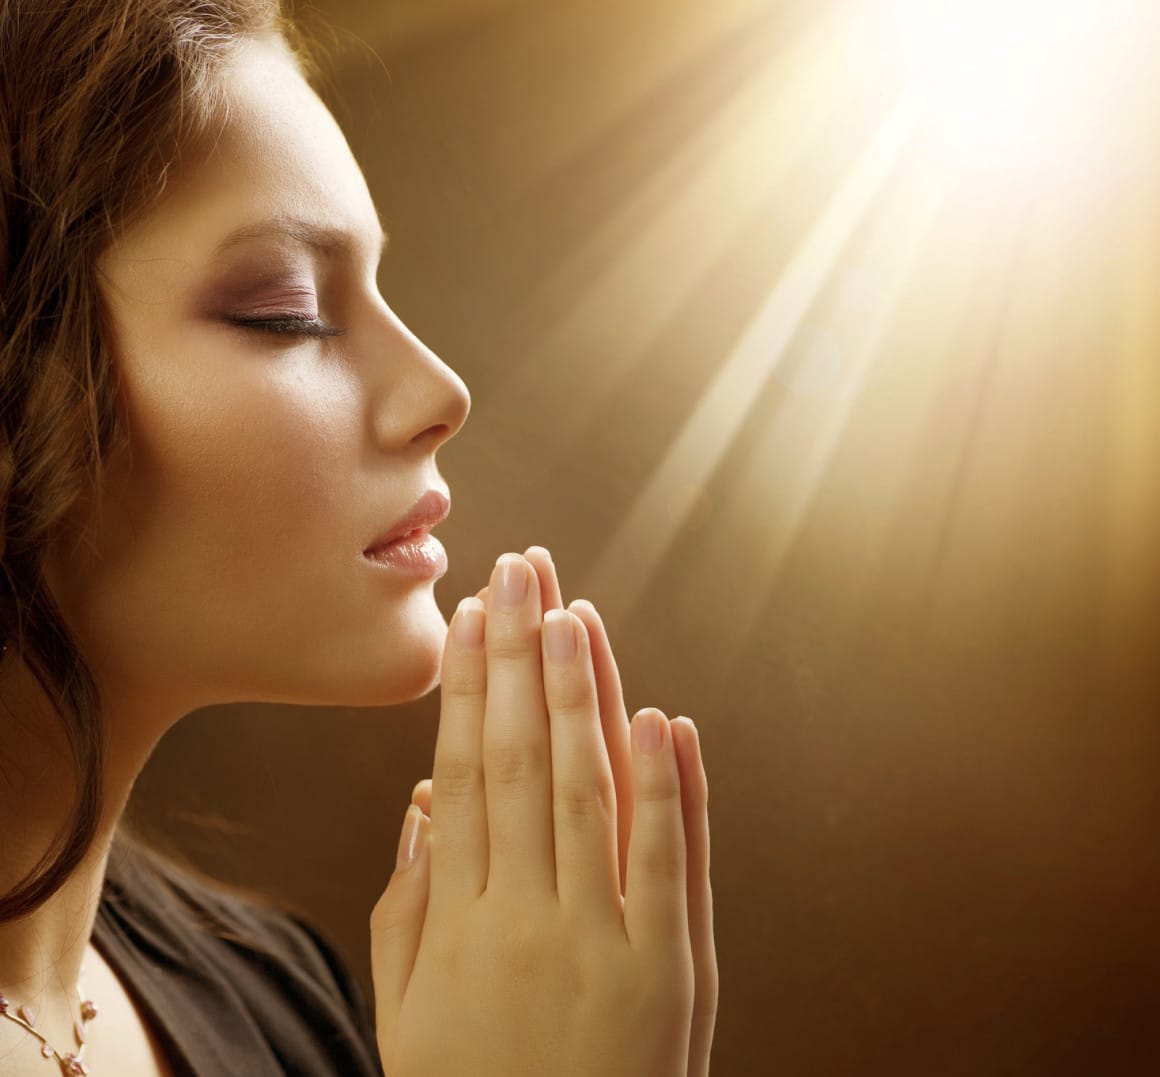 Doa Orang Kristen Cara Berdoa Agar Mau Mendengar Injil Doa Qunut Imagesee